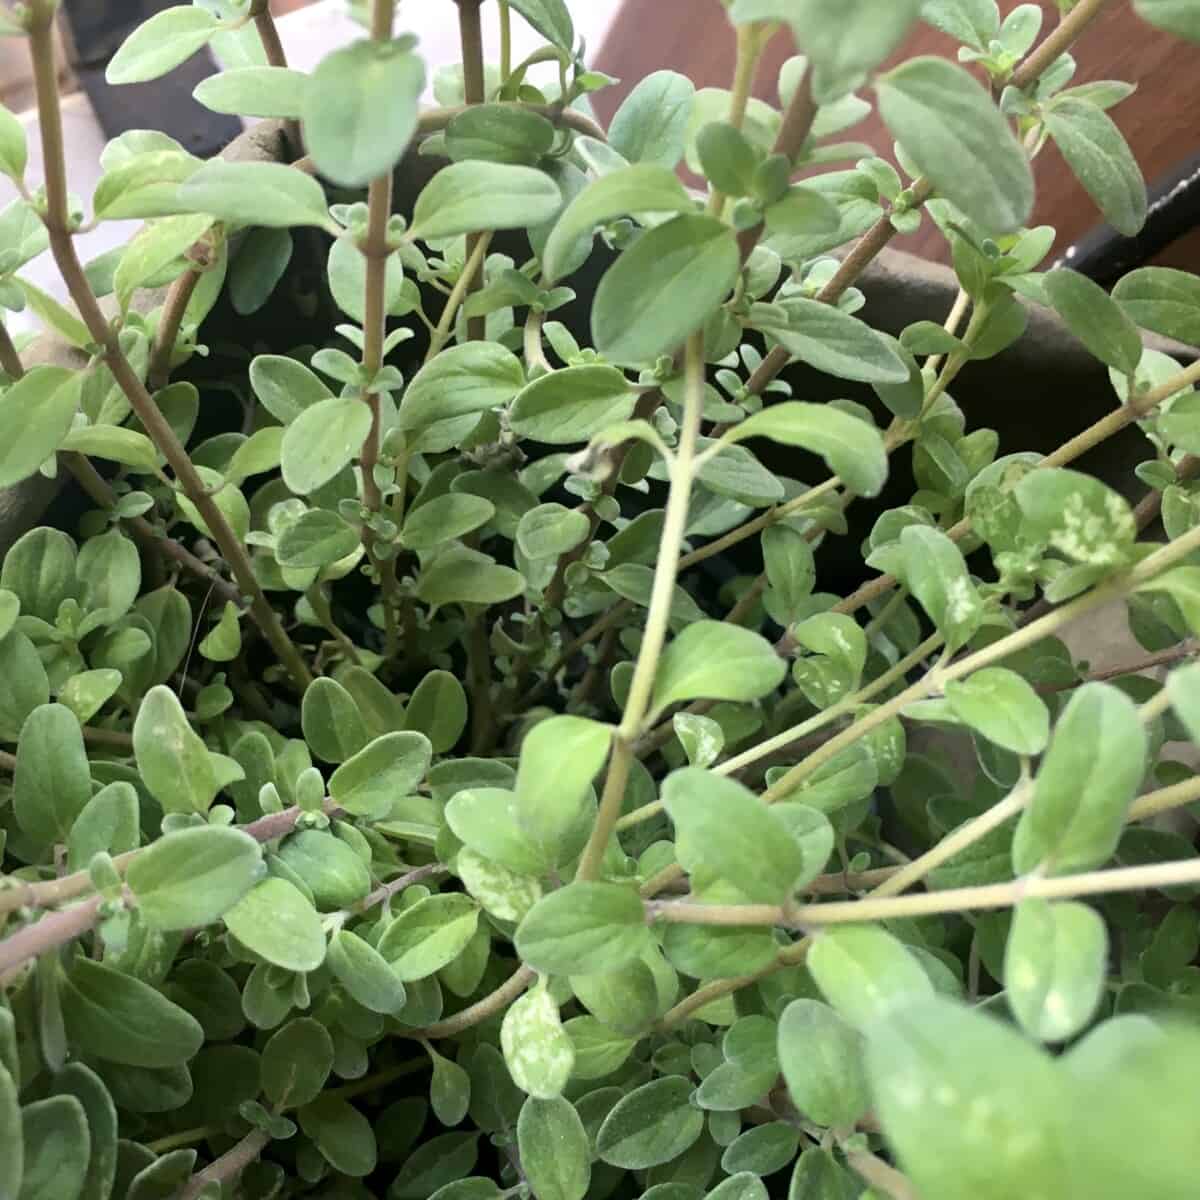 Fresh oregano up close in plant in my window box.